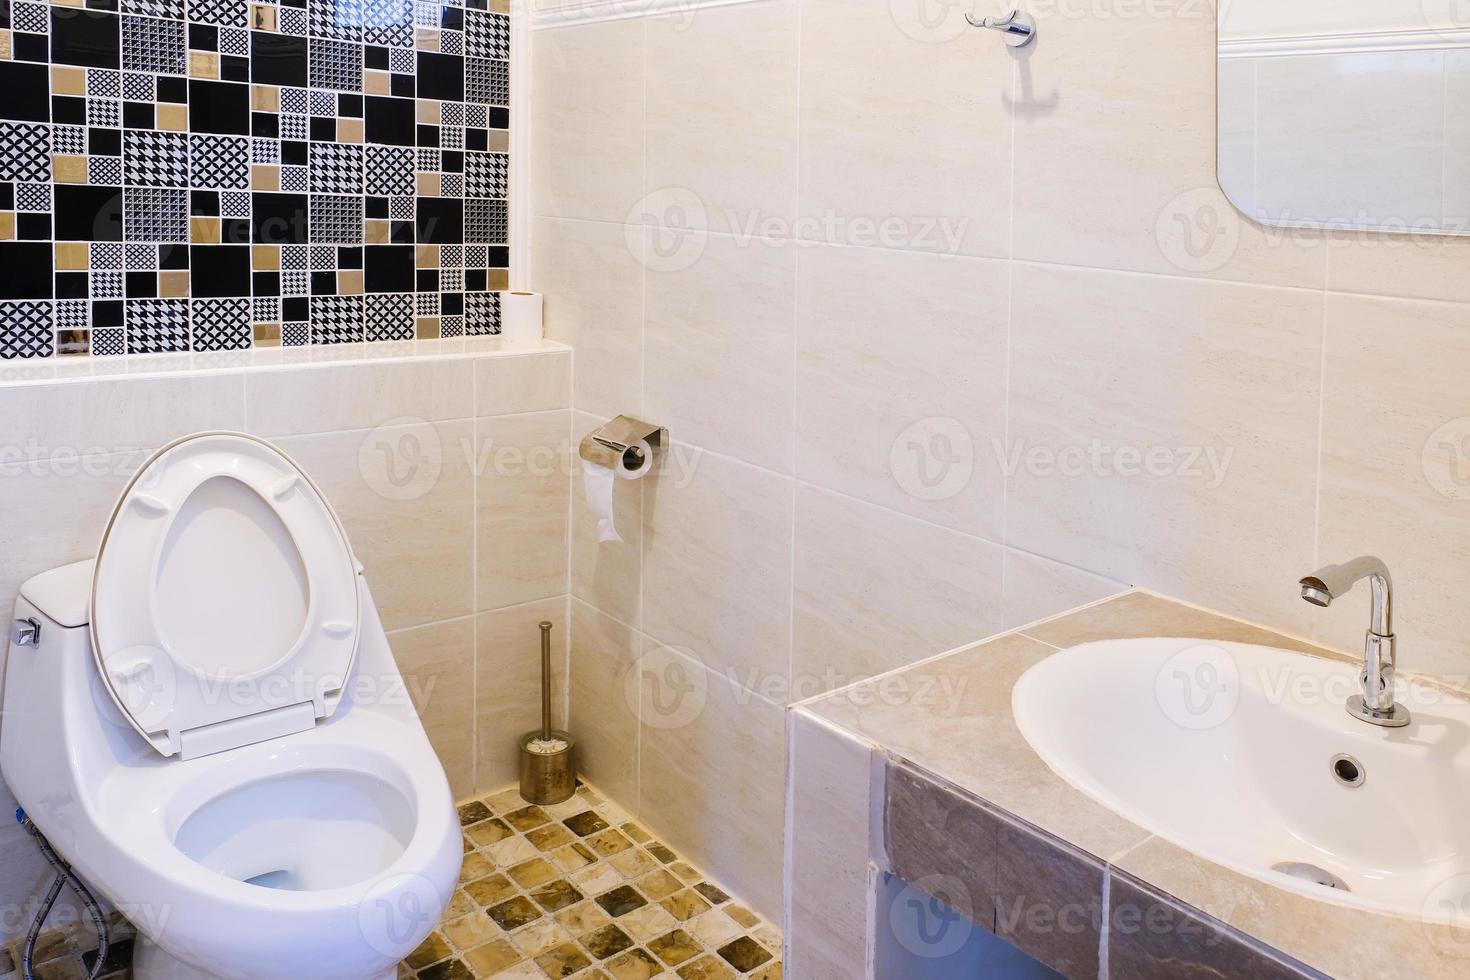 Toilet bowl in a modern bathroom ,flush toilet clean bathroom photo